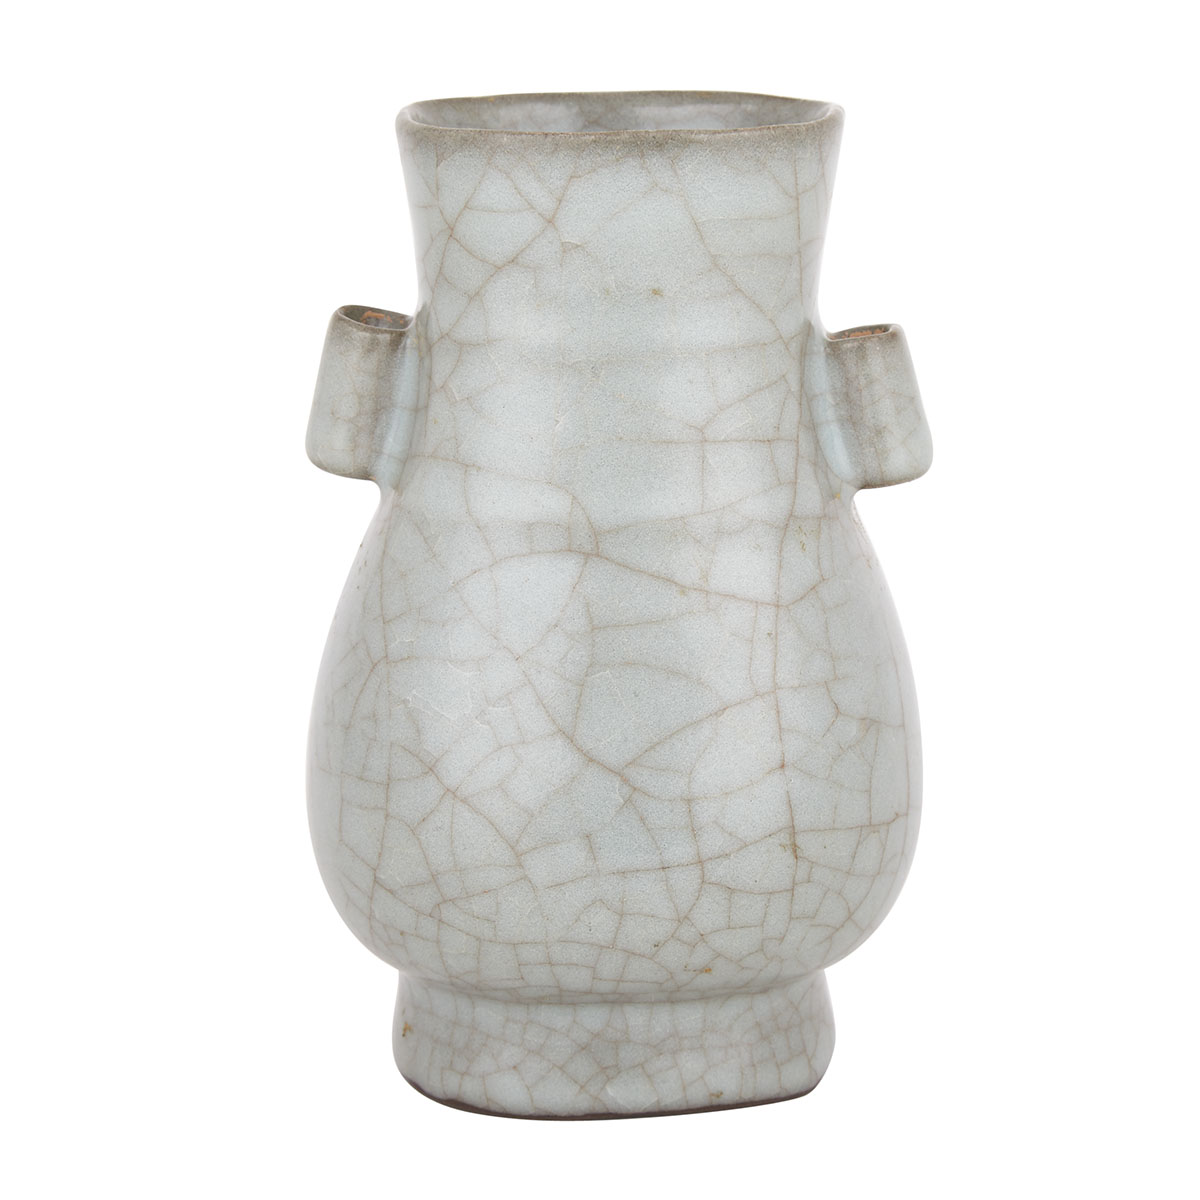 Small Guan-Type Hexagonal Hu Vase, Qing Dynasty or Earlier